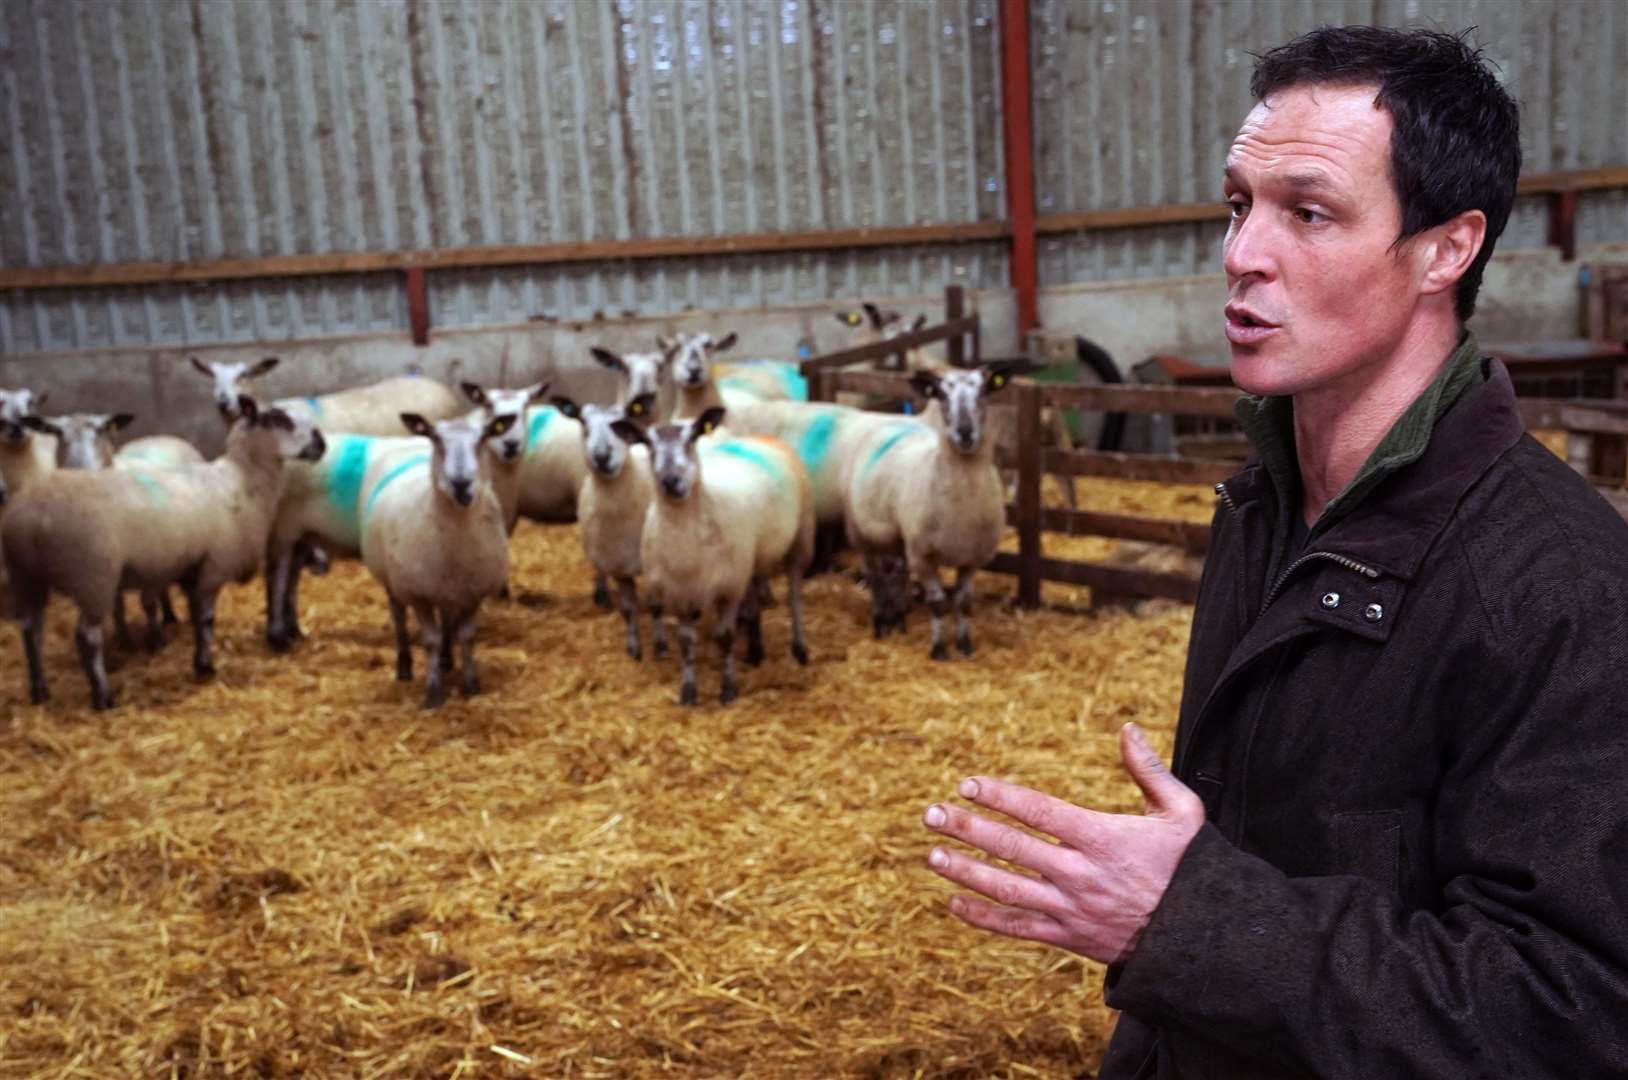 Thomas Carrick tends to his flock of sheep at High Crossgill Farm in Alston Moor, Cumbria (Owen Humphreys/PA)